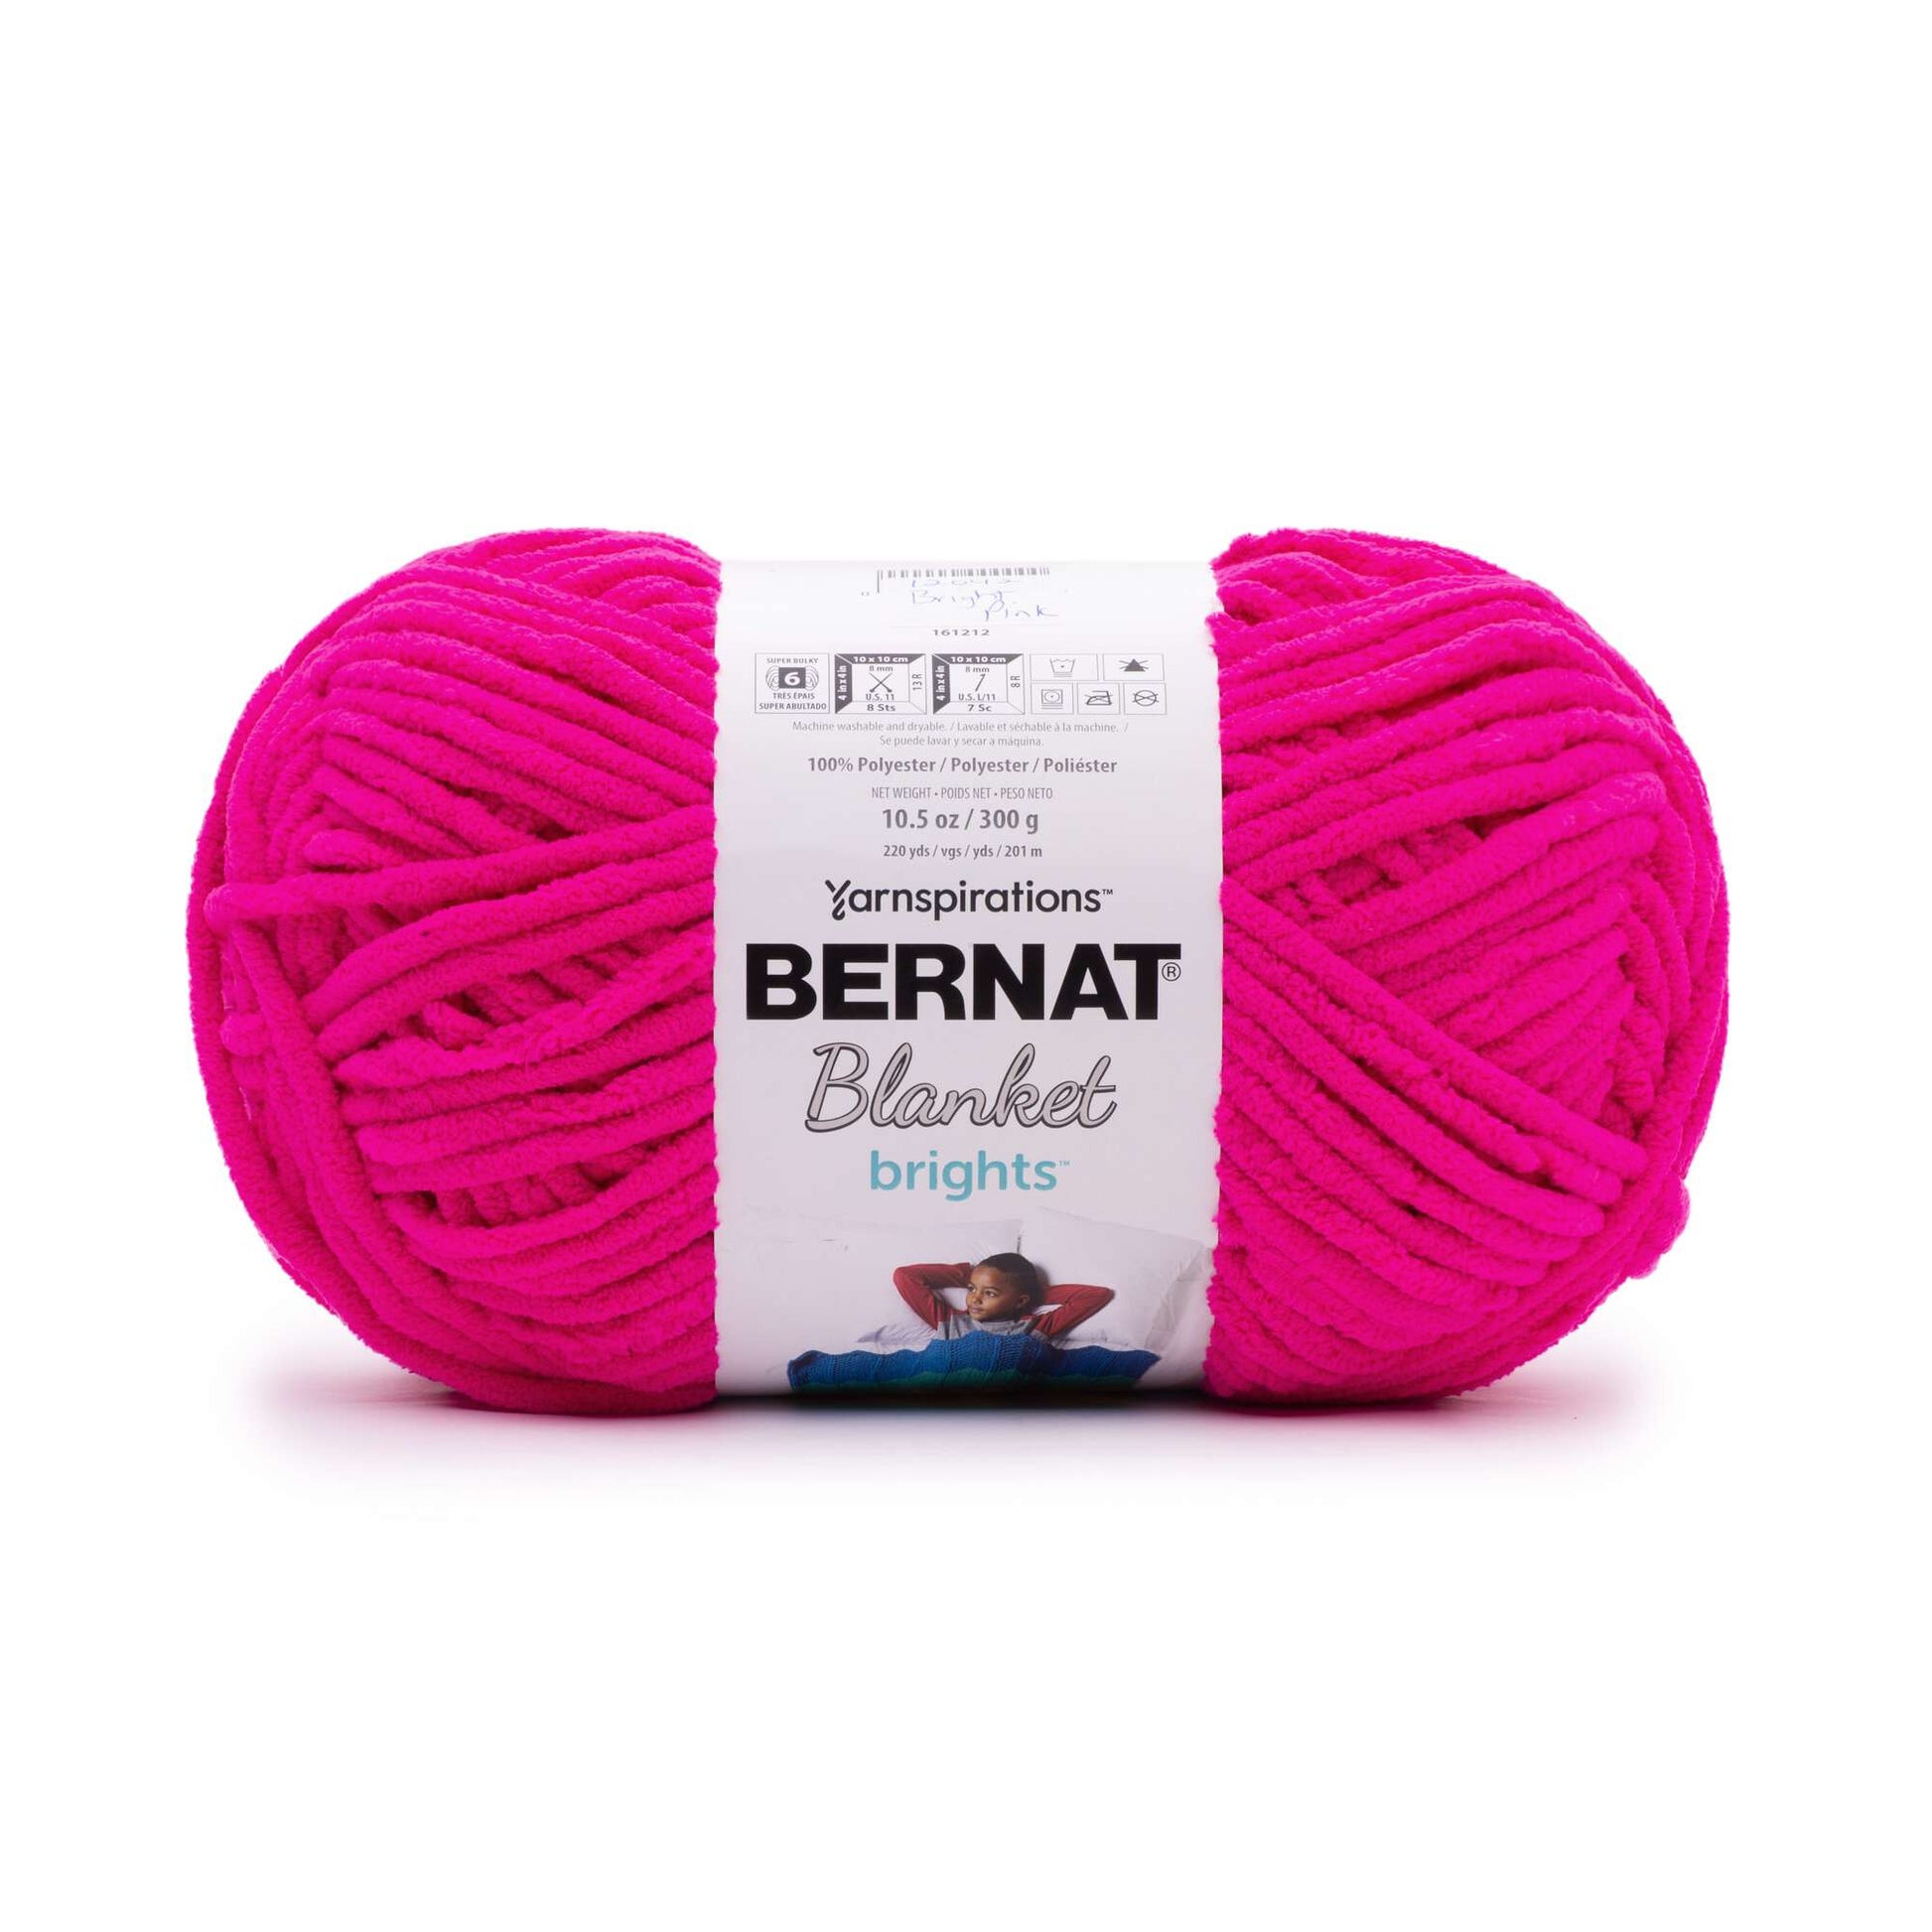 Bernat Blanket Brights Yarn (300g/10.5oz) Bright Pink